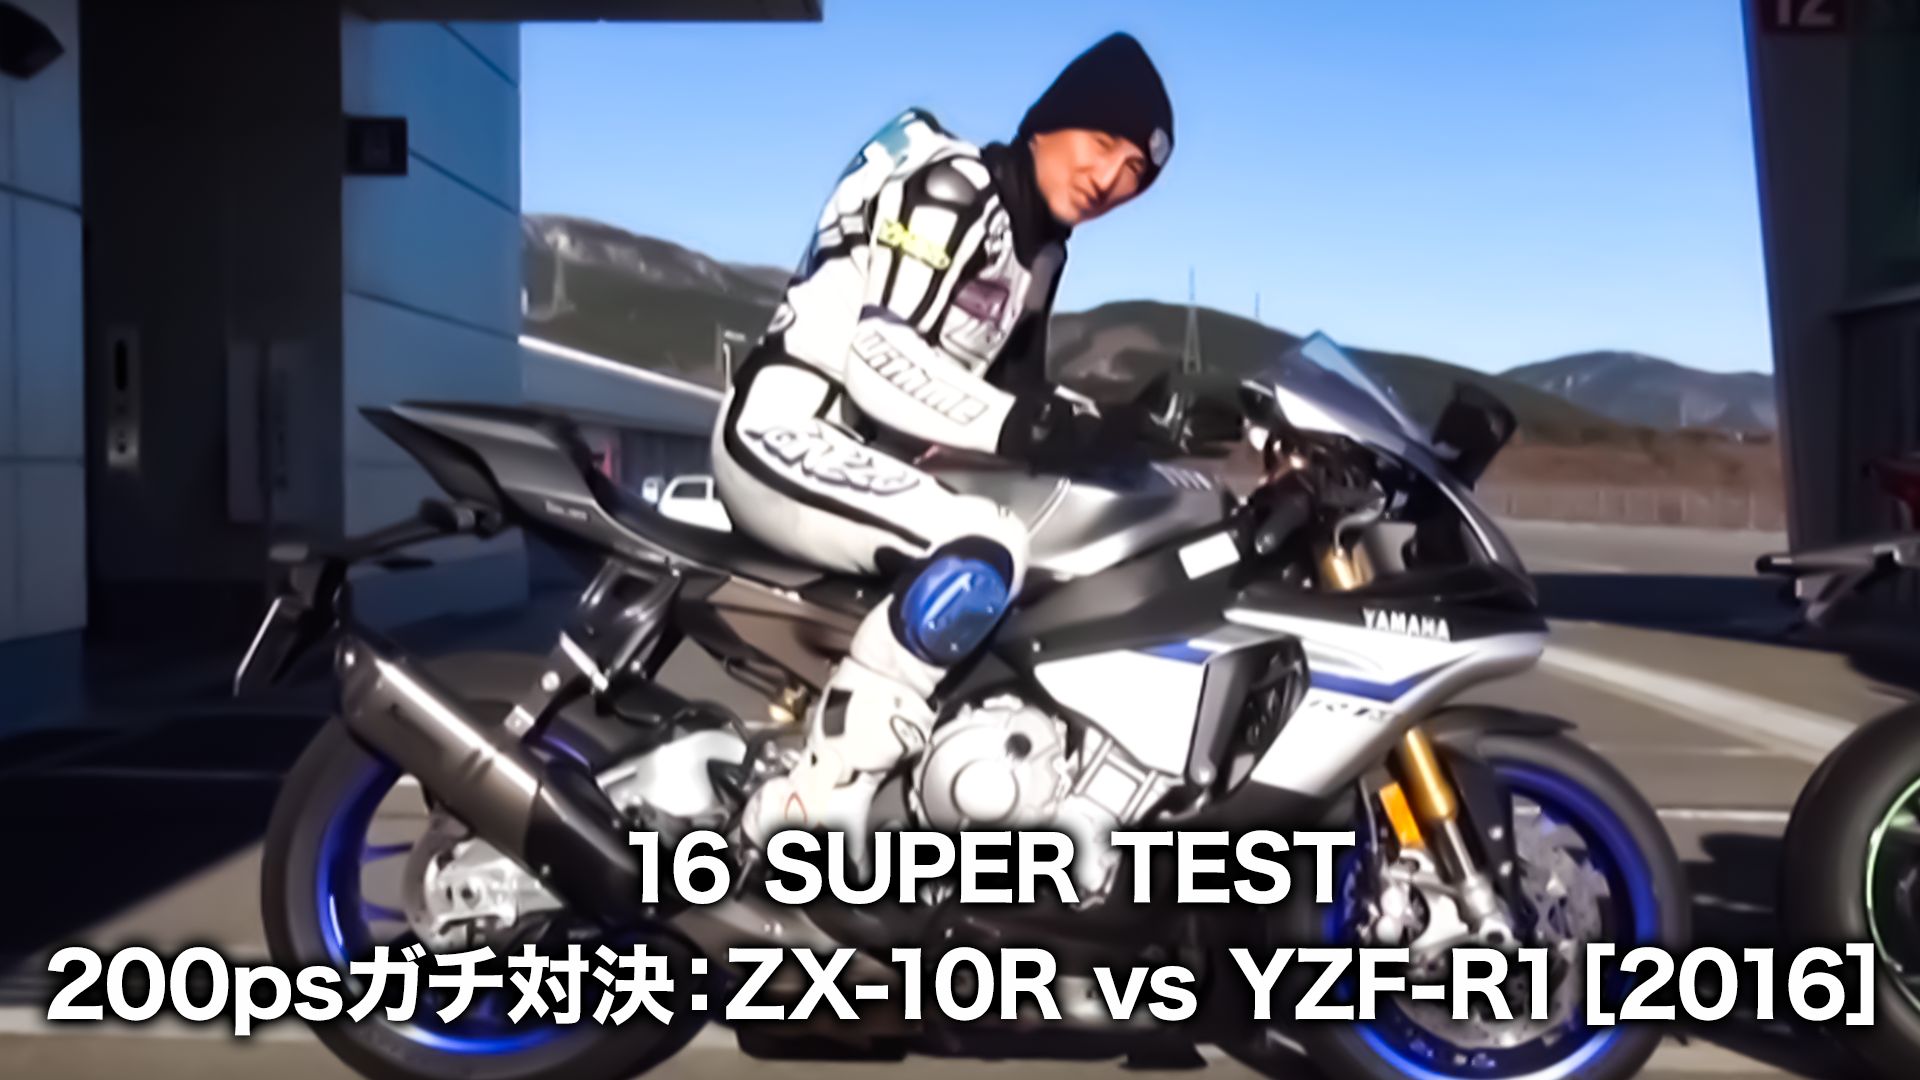 16 SUPER TEST 200psガチ対決:ZX-10R vs YZF-R1 2016